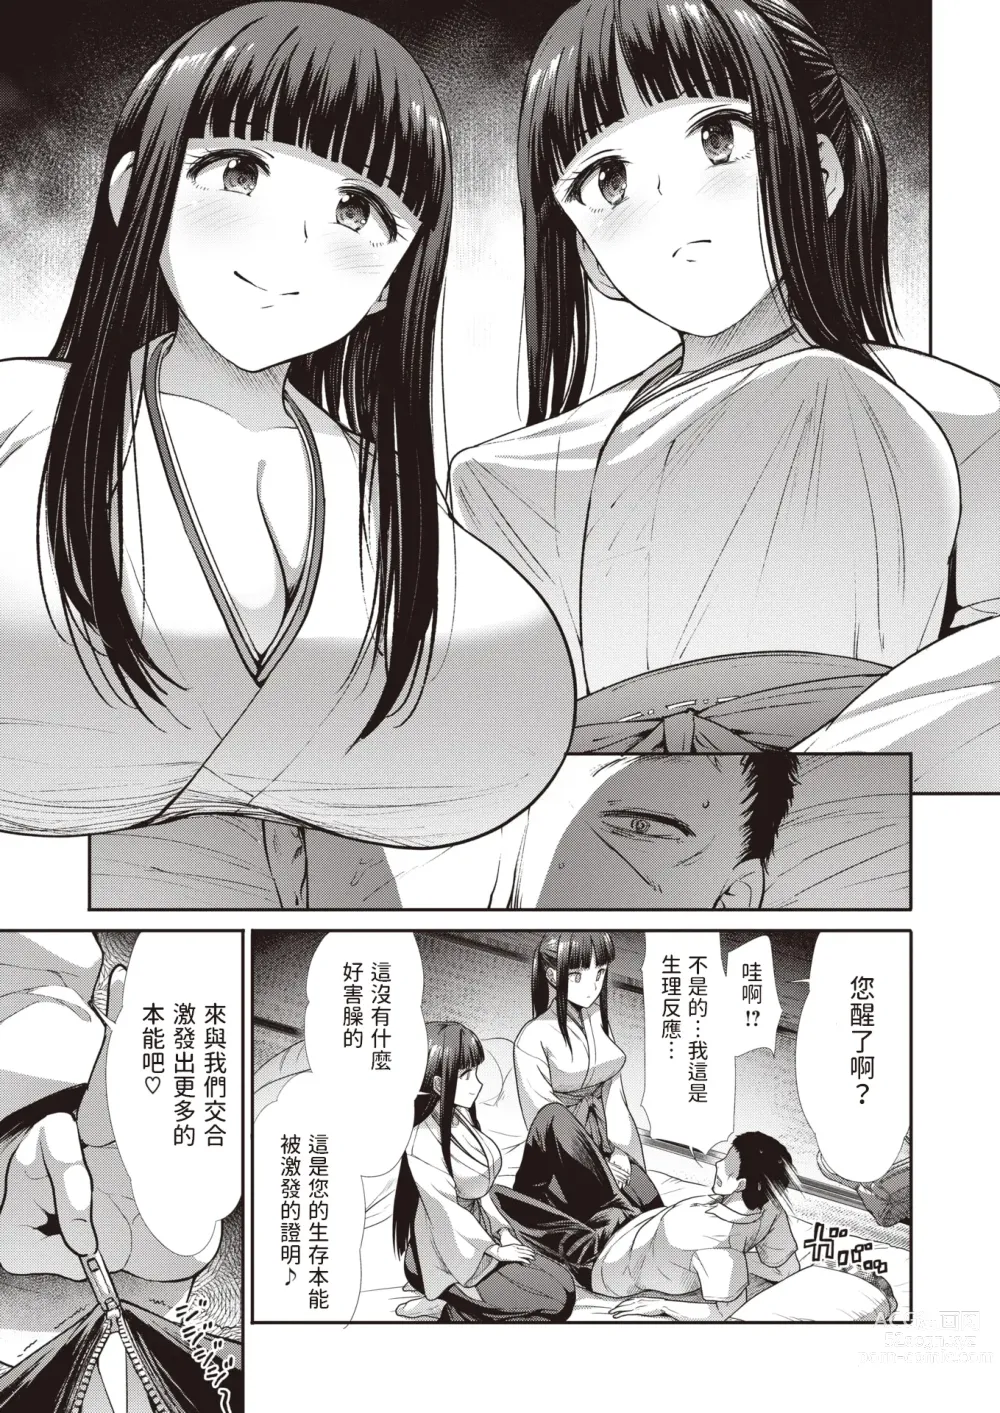 Page 7 of manga Mayoiga